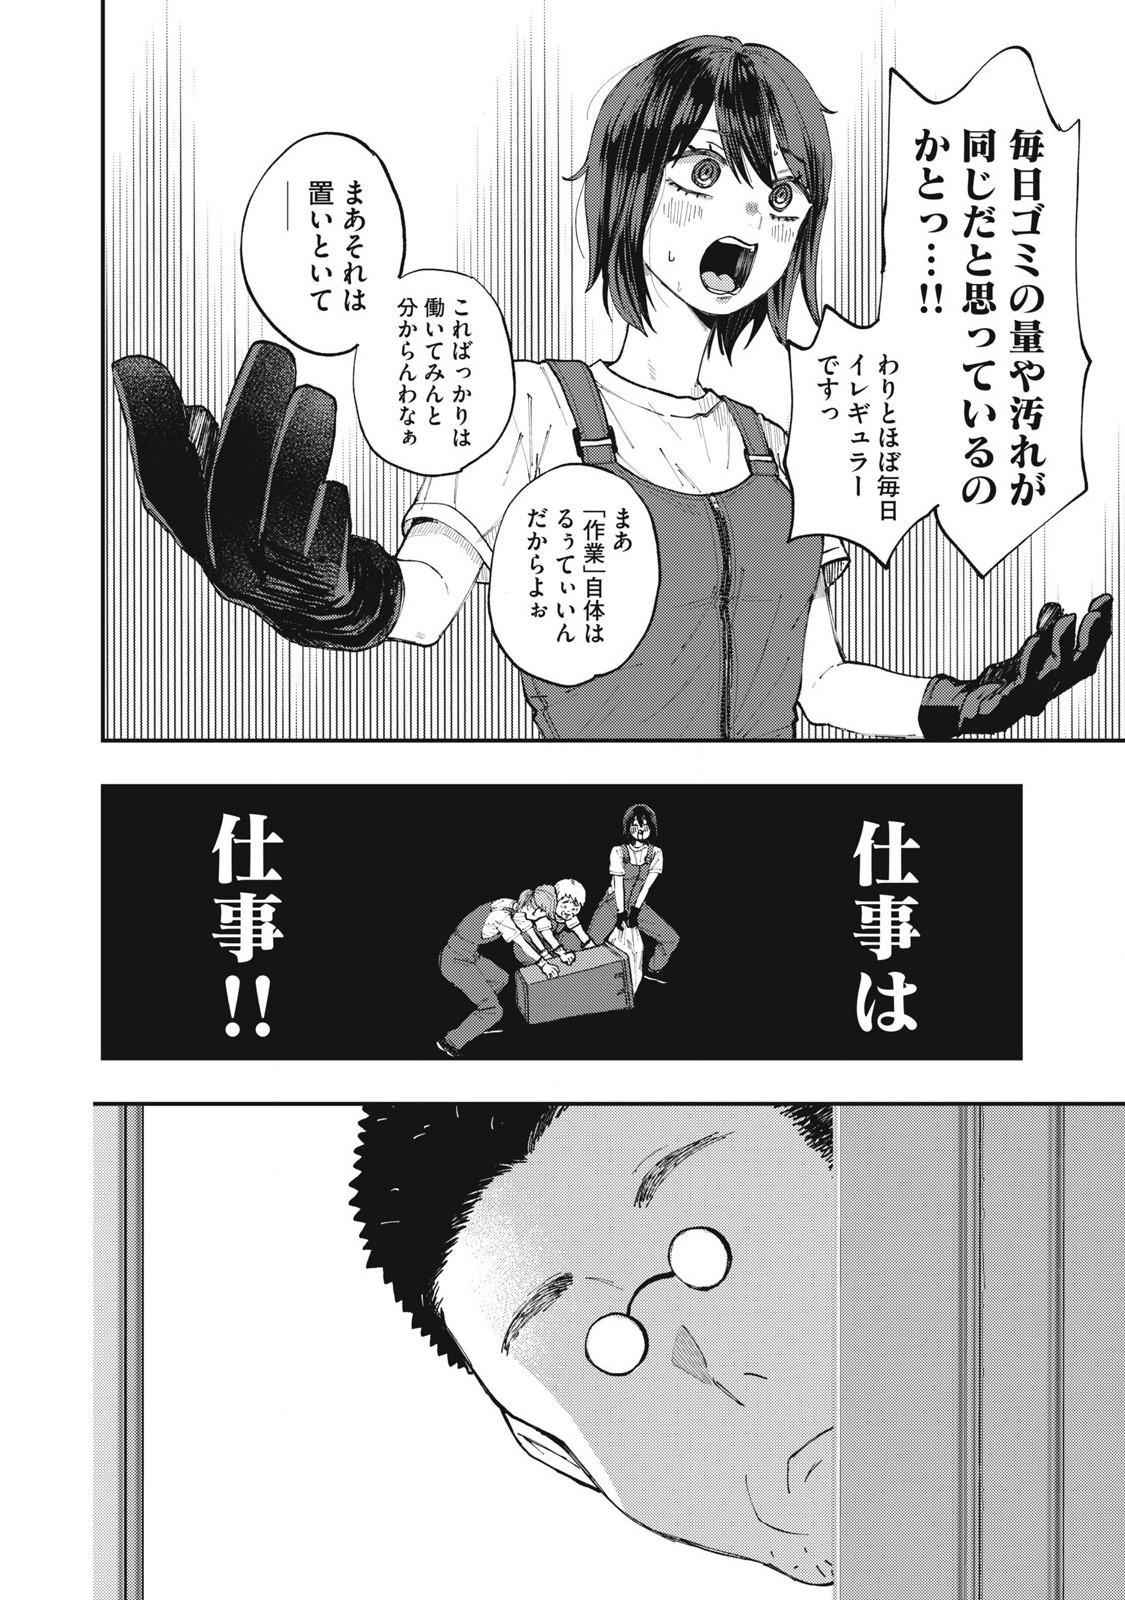 Seisouin Nono-chan Kyou no Tsubuyaki - Chapter 2 - Page 8